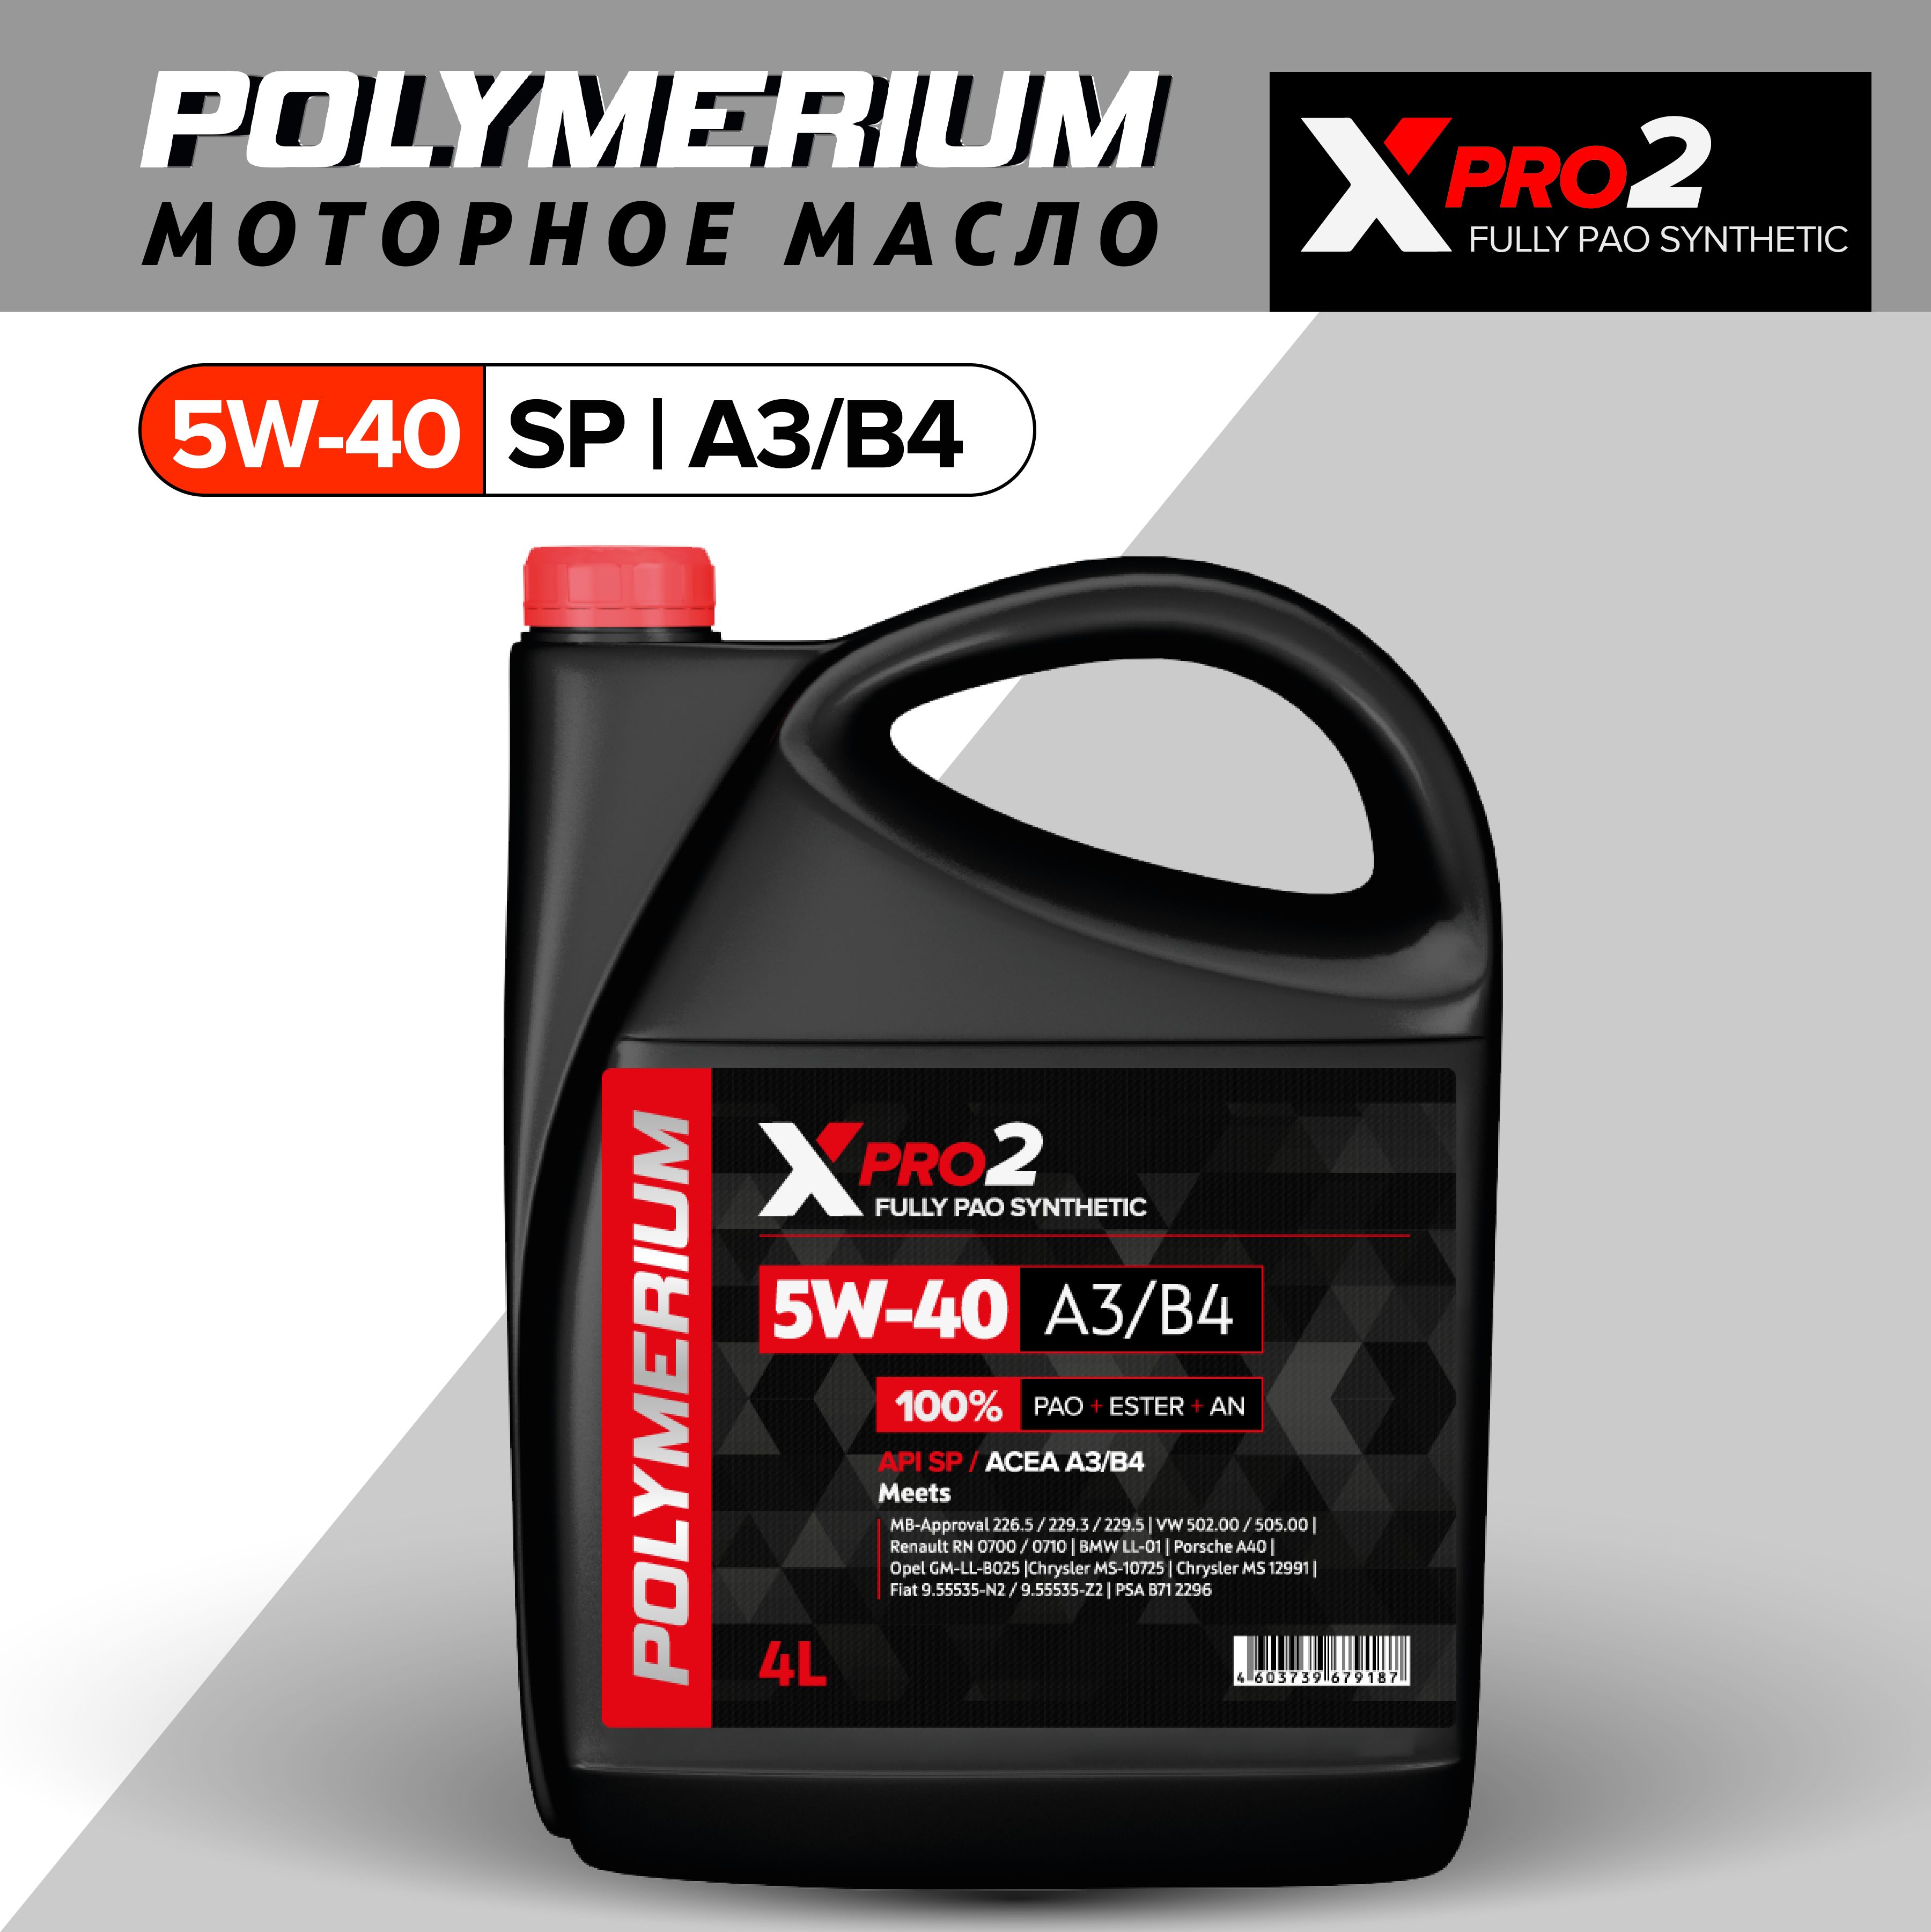 Polymerium xpro2 5w-40. Моторное масло Polymerium. Полимериум 5w40 купить. Масло полимериум 5w40 цена. Полимериум 5w40 отзывы